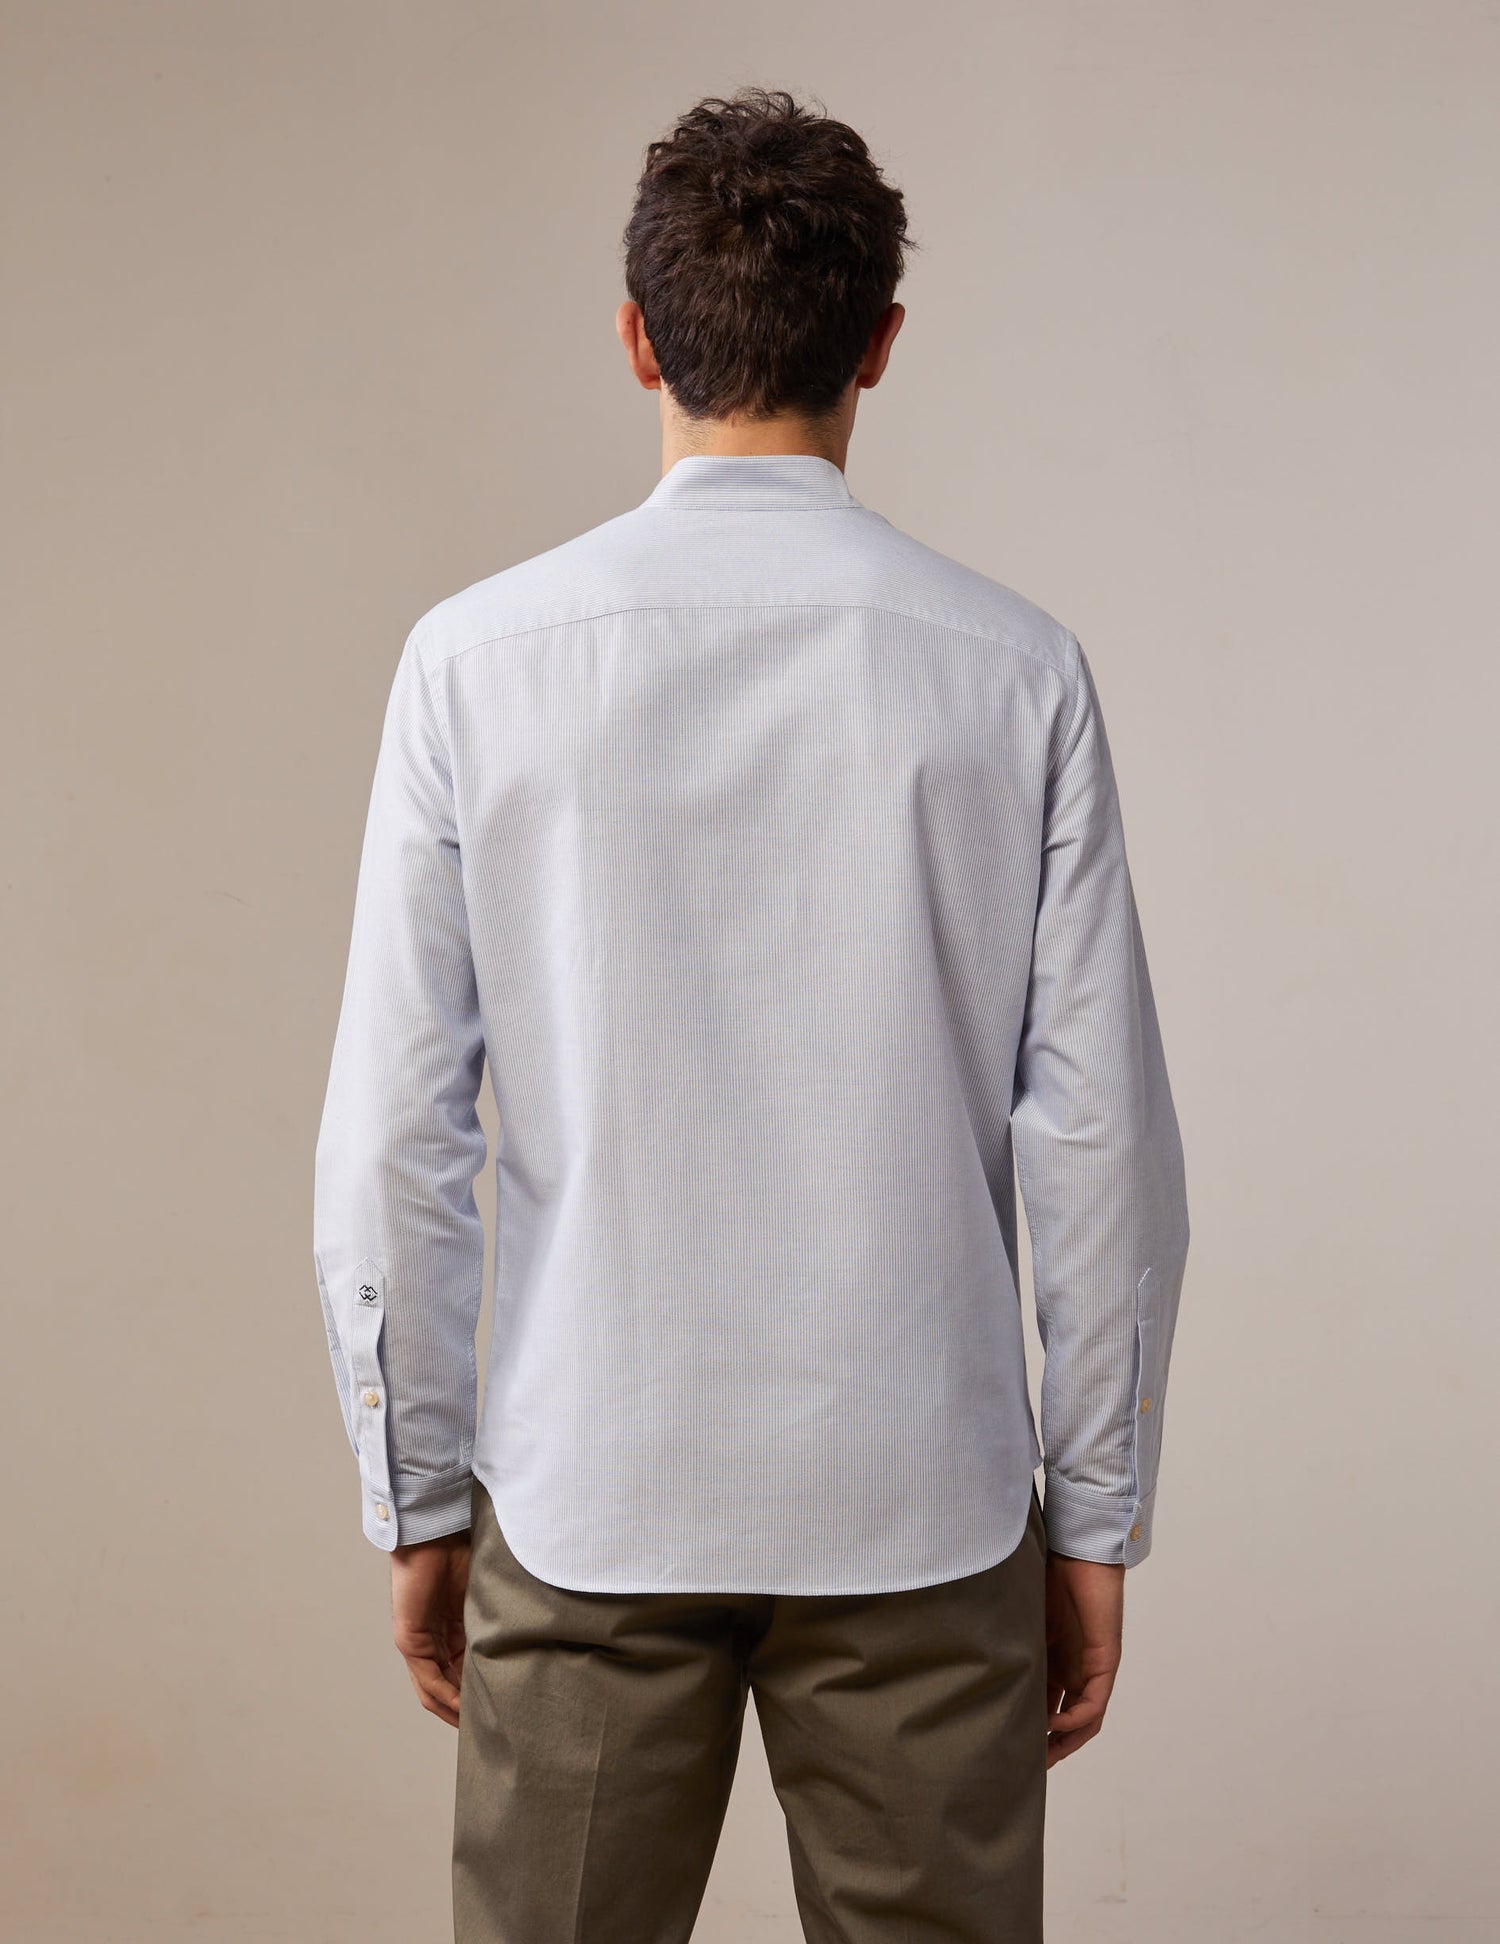 Striped blue Carl shirt - Oxford - Open straight Collar#2